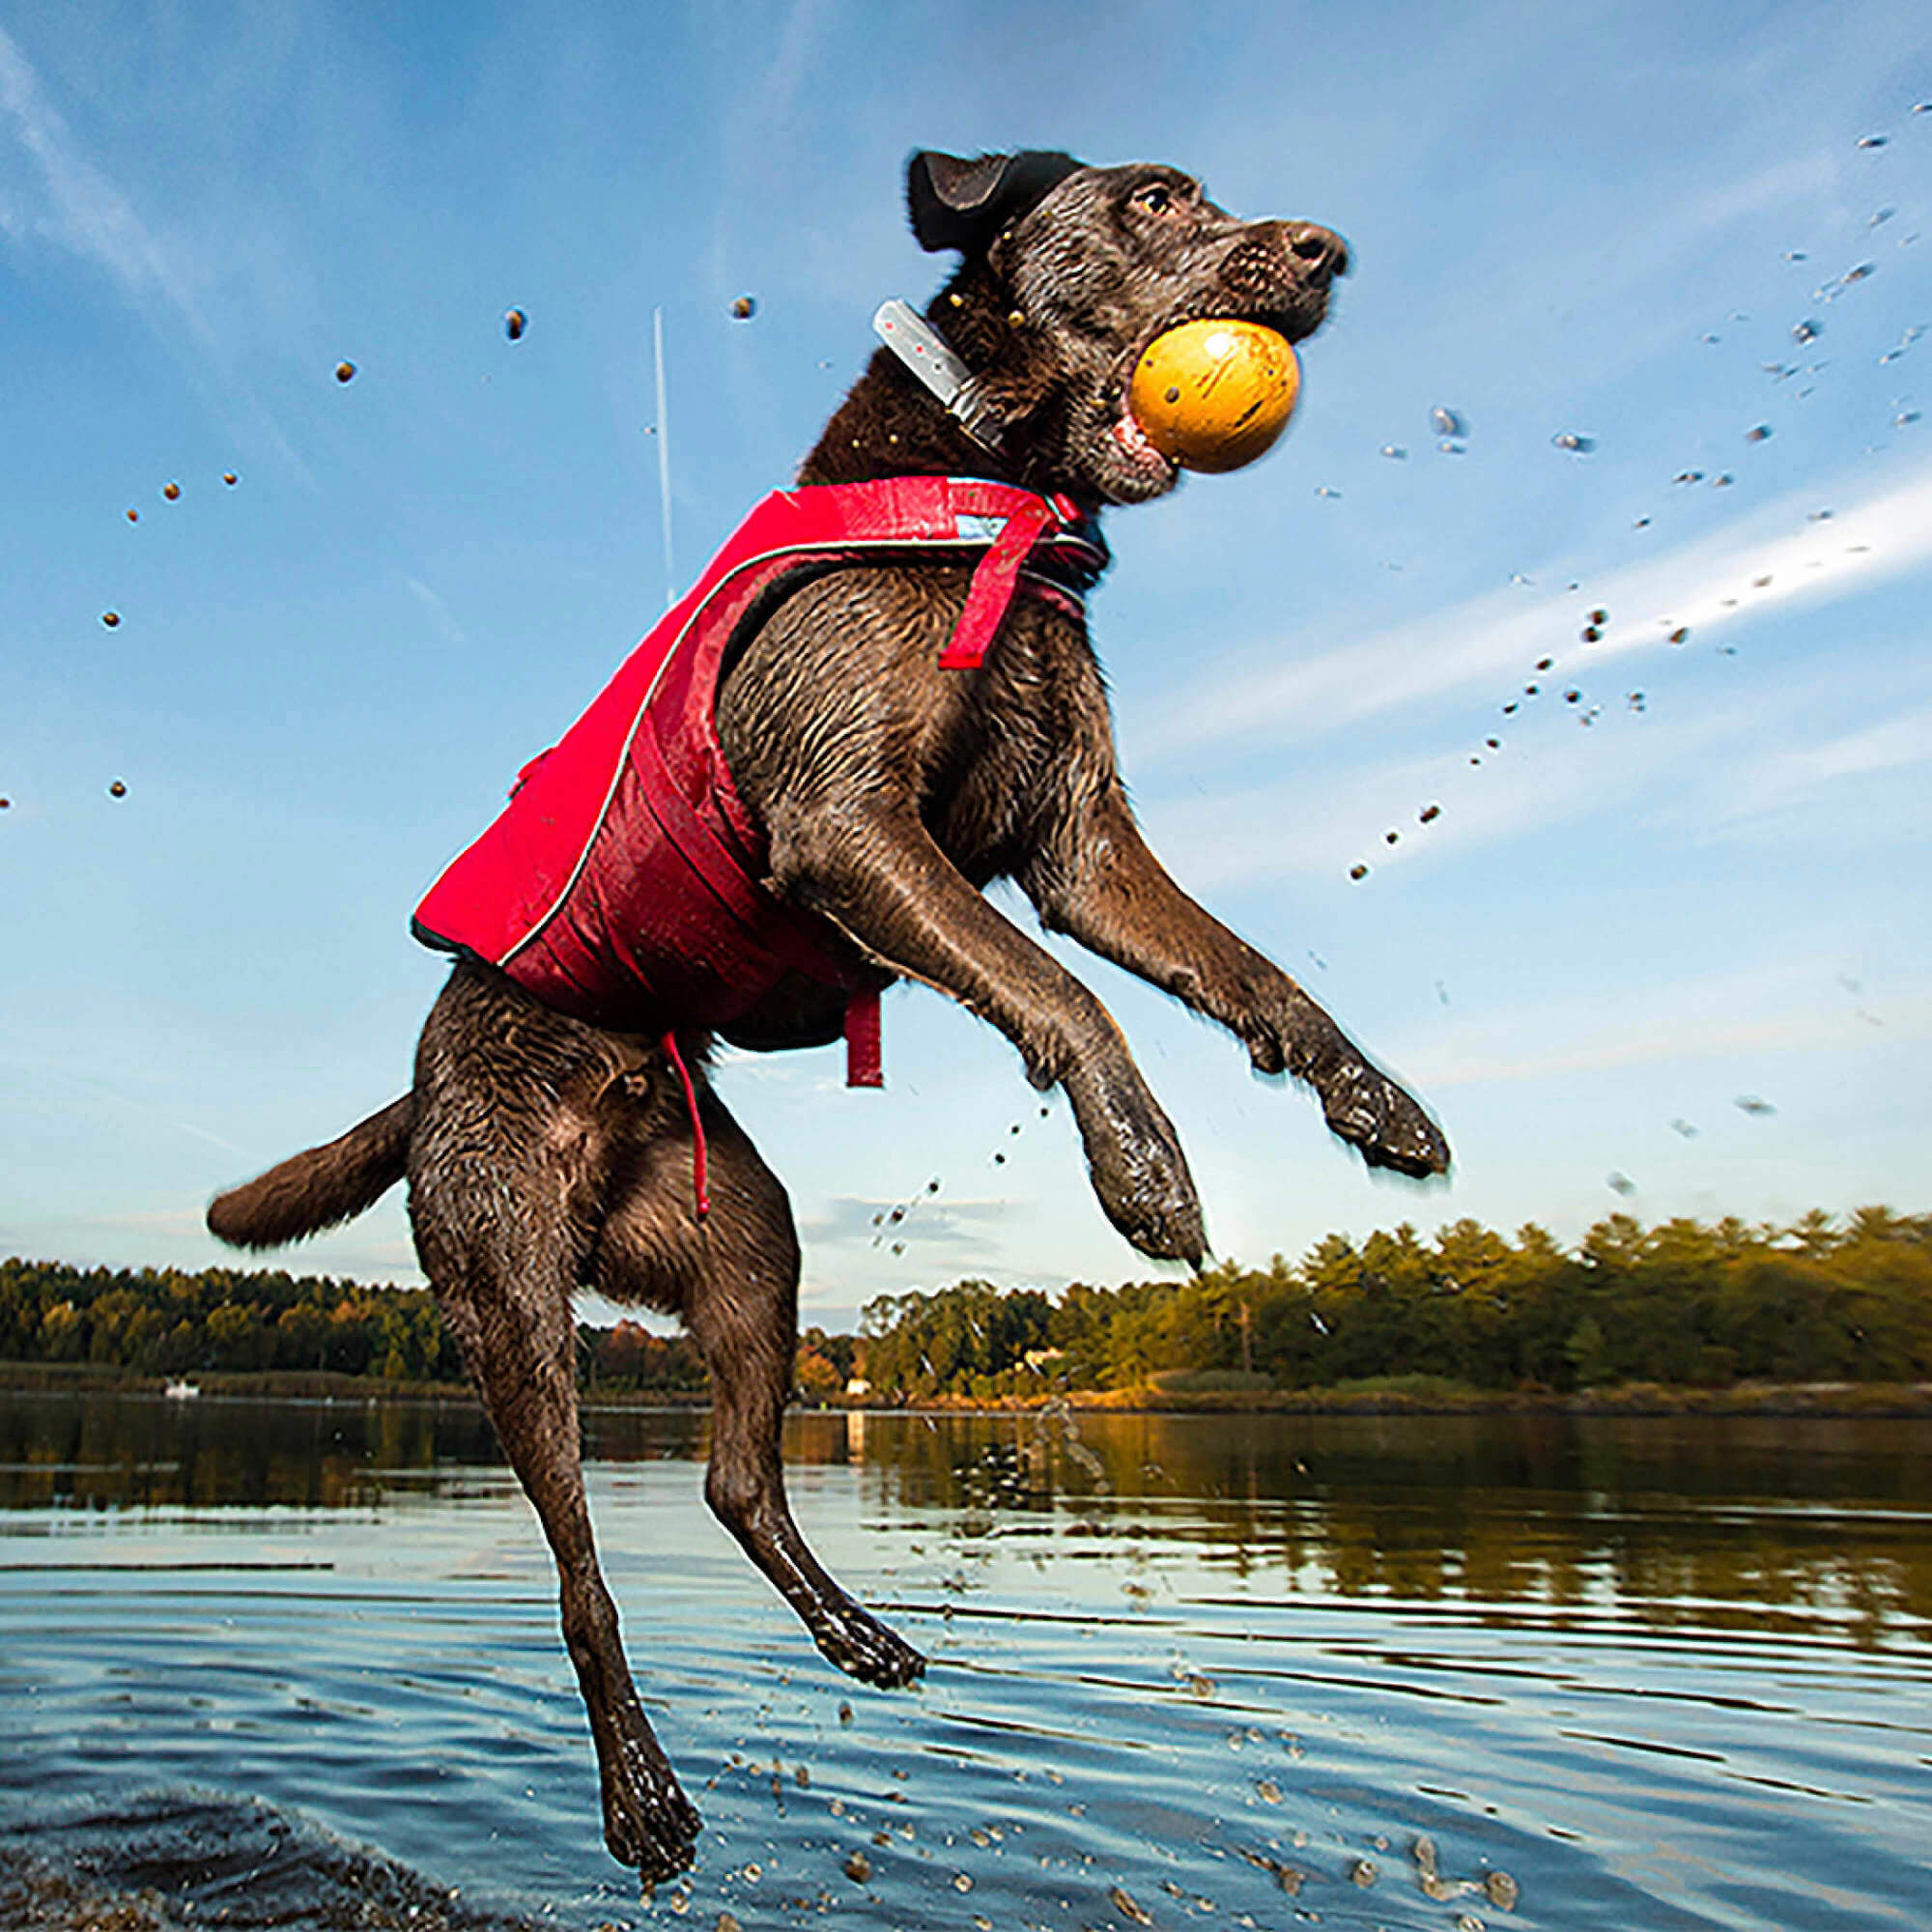 Dog catching a ball outside wearing kurgo surf n turf dog life jacket